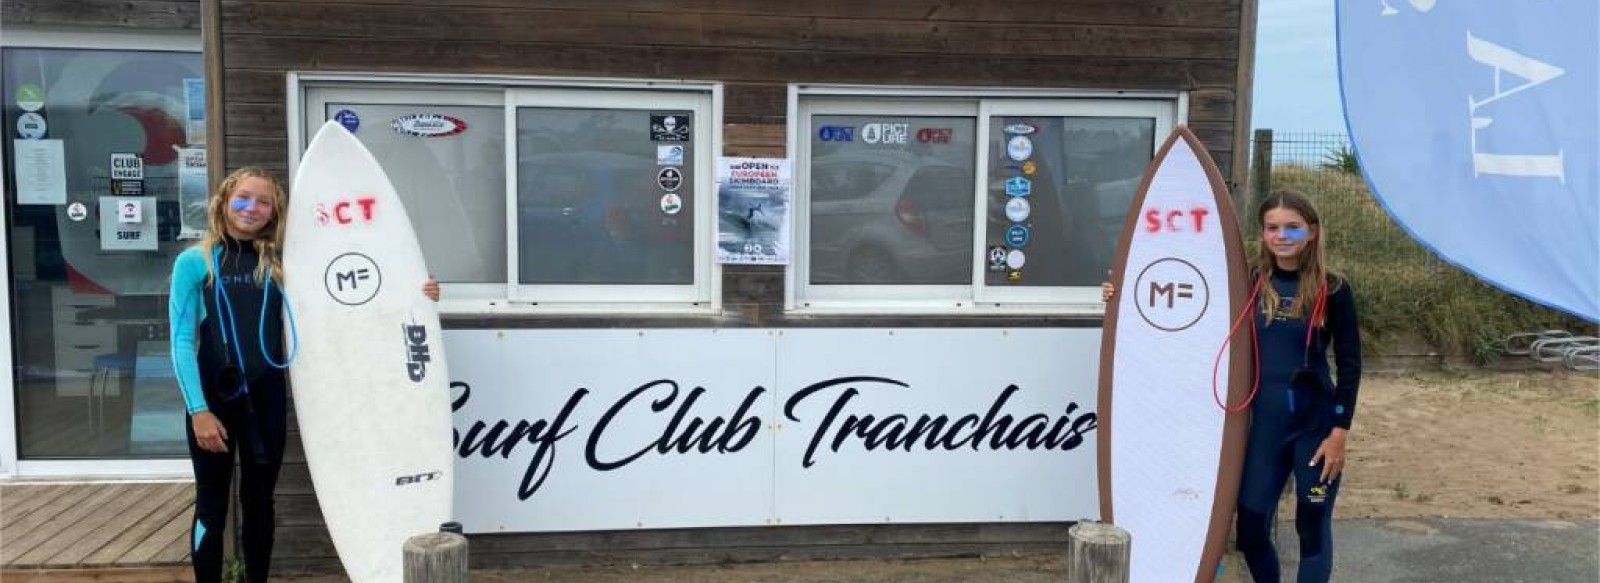 SURF CLUB TRANCHAIS